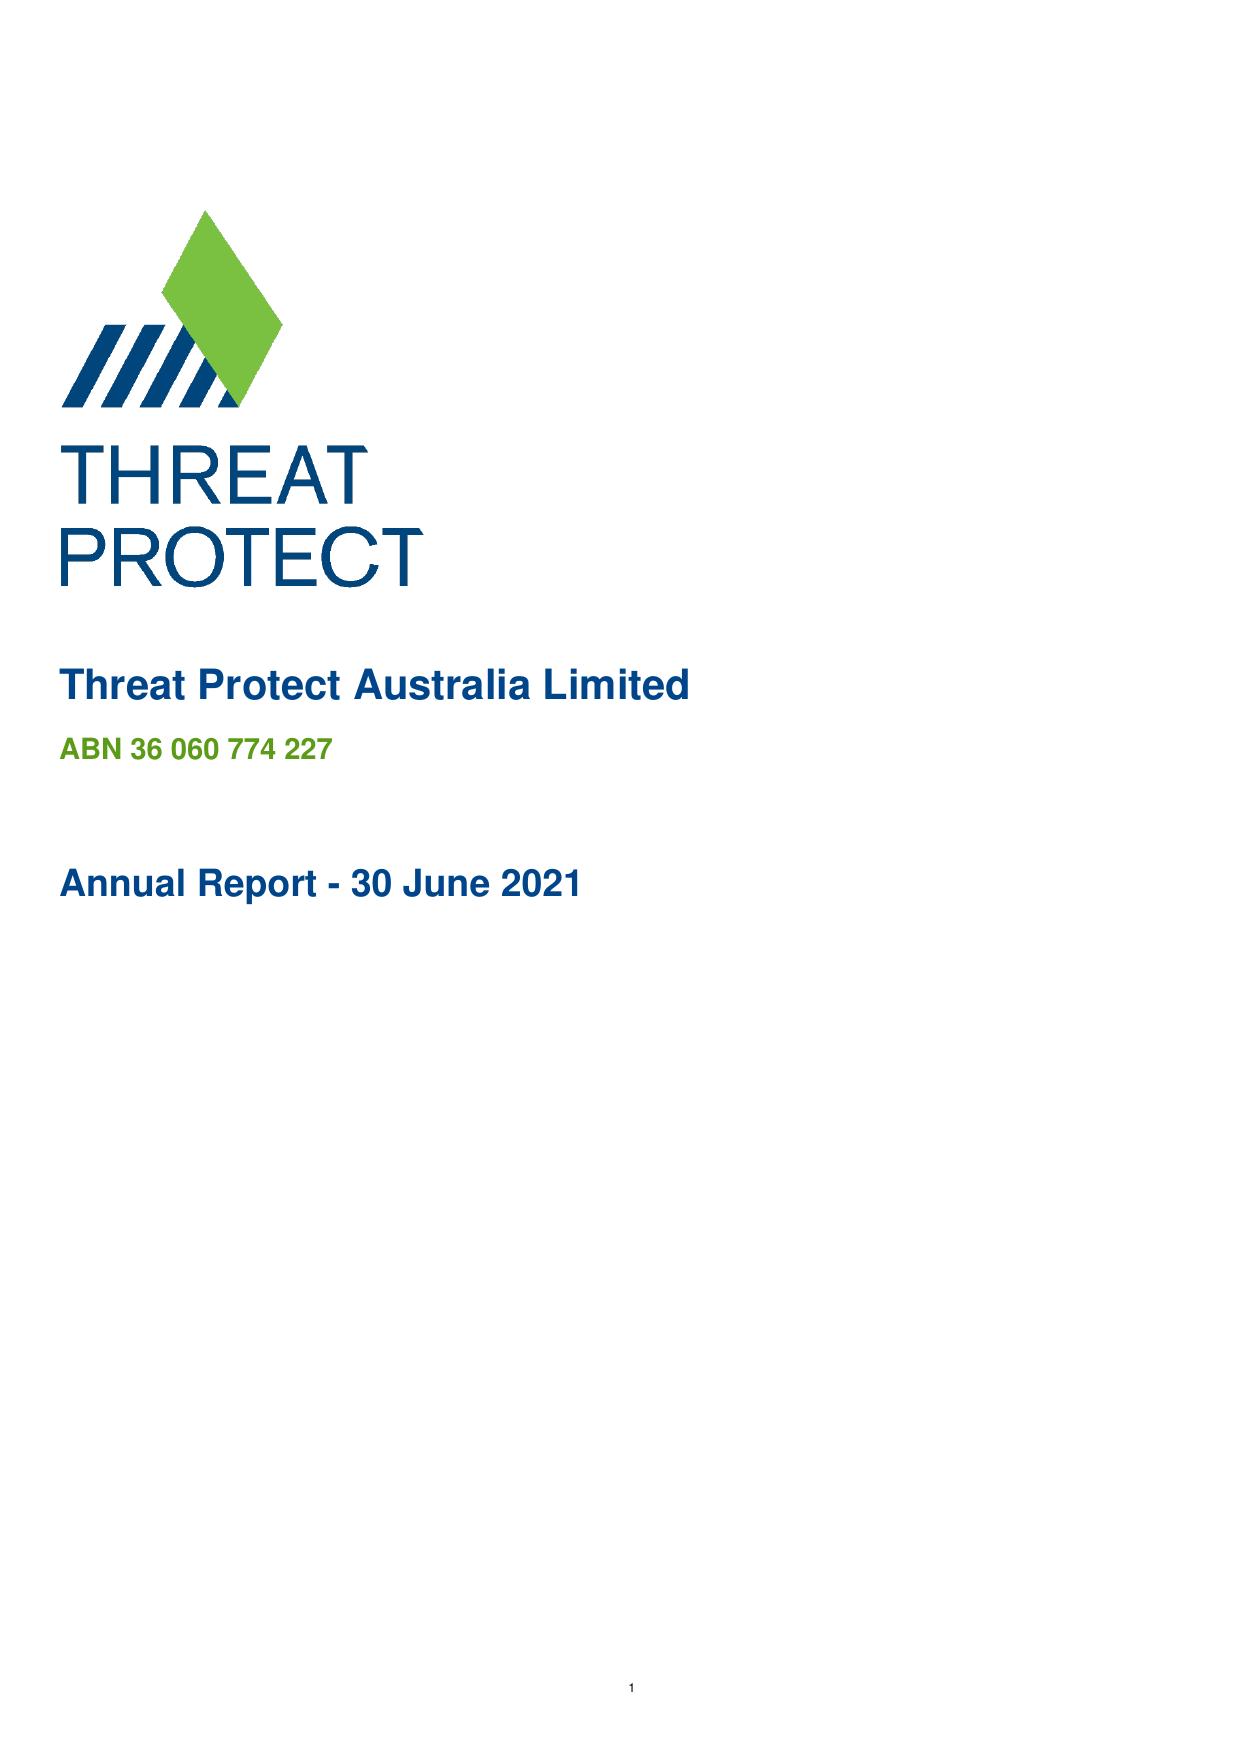 THREATPROTECT 2021 Annual Report